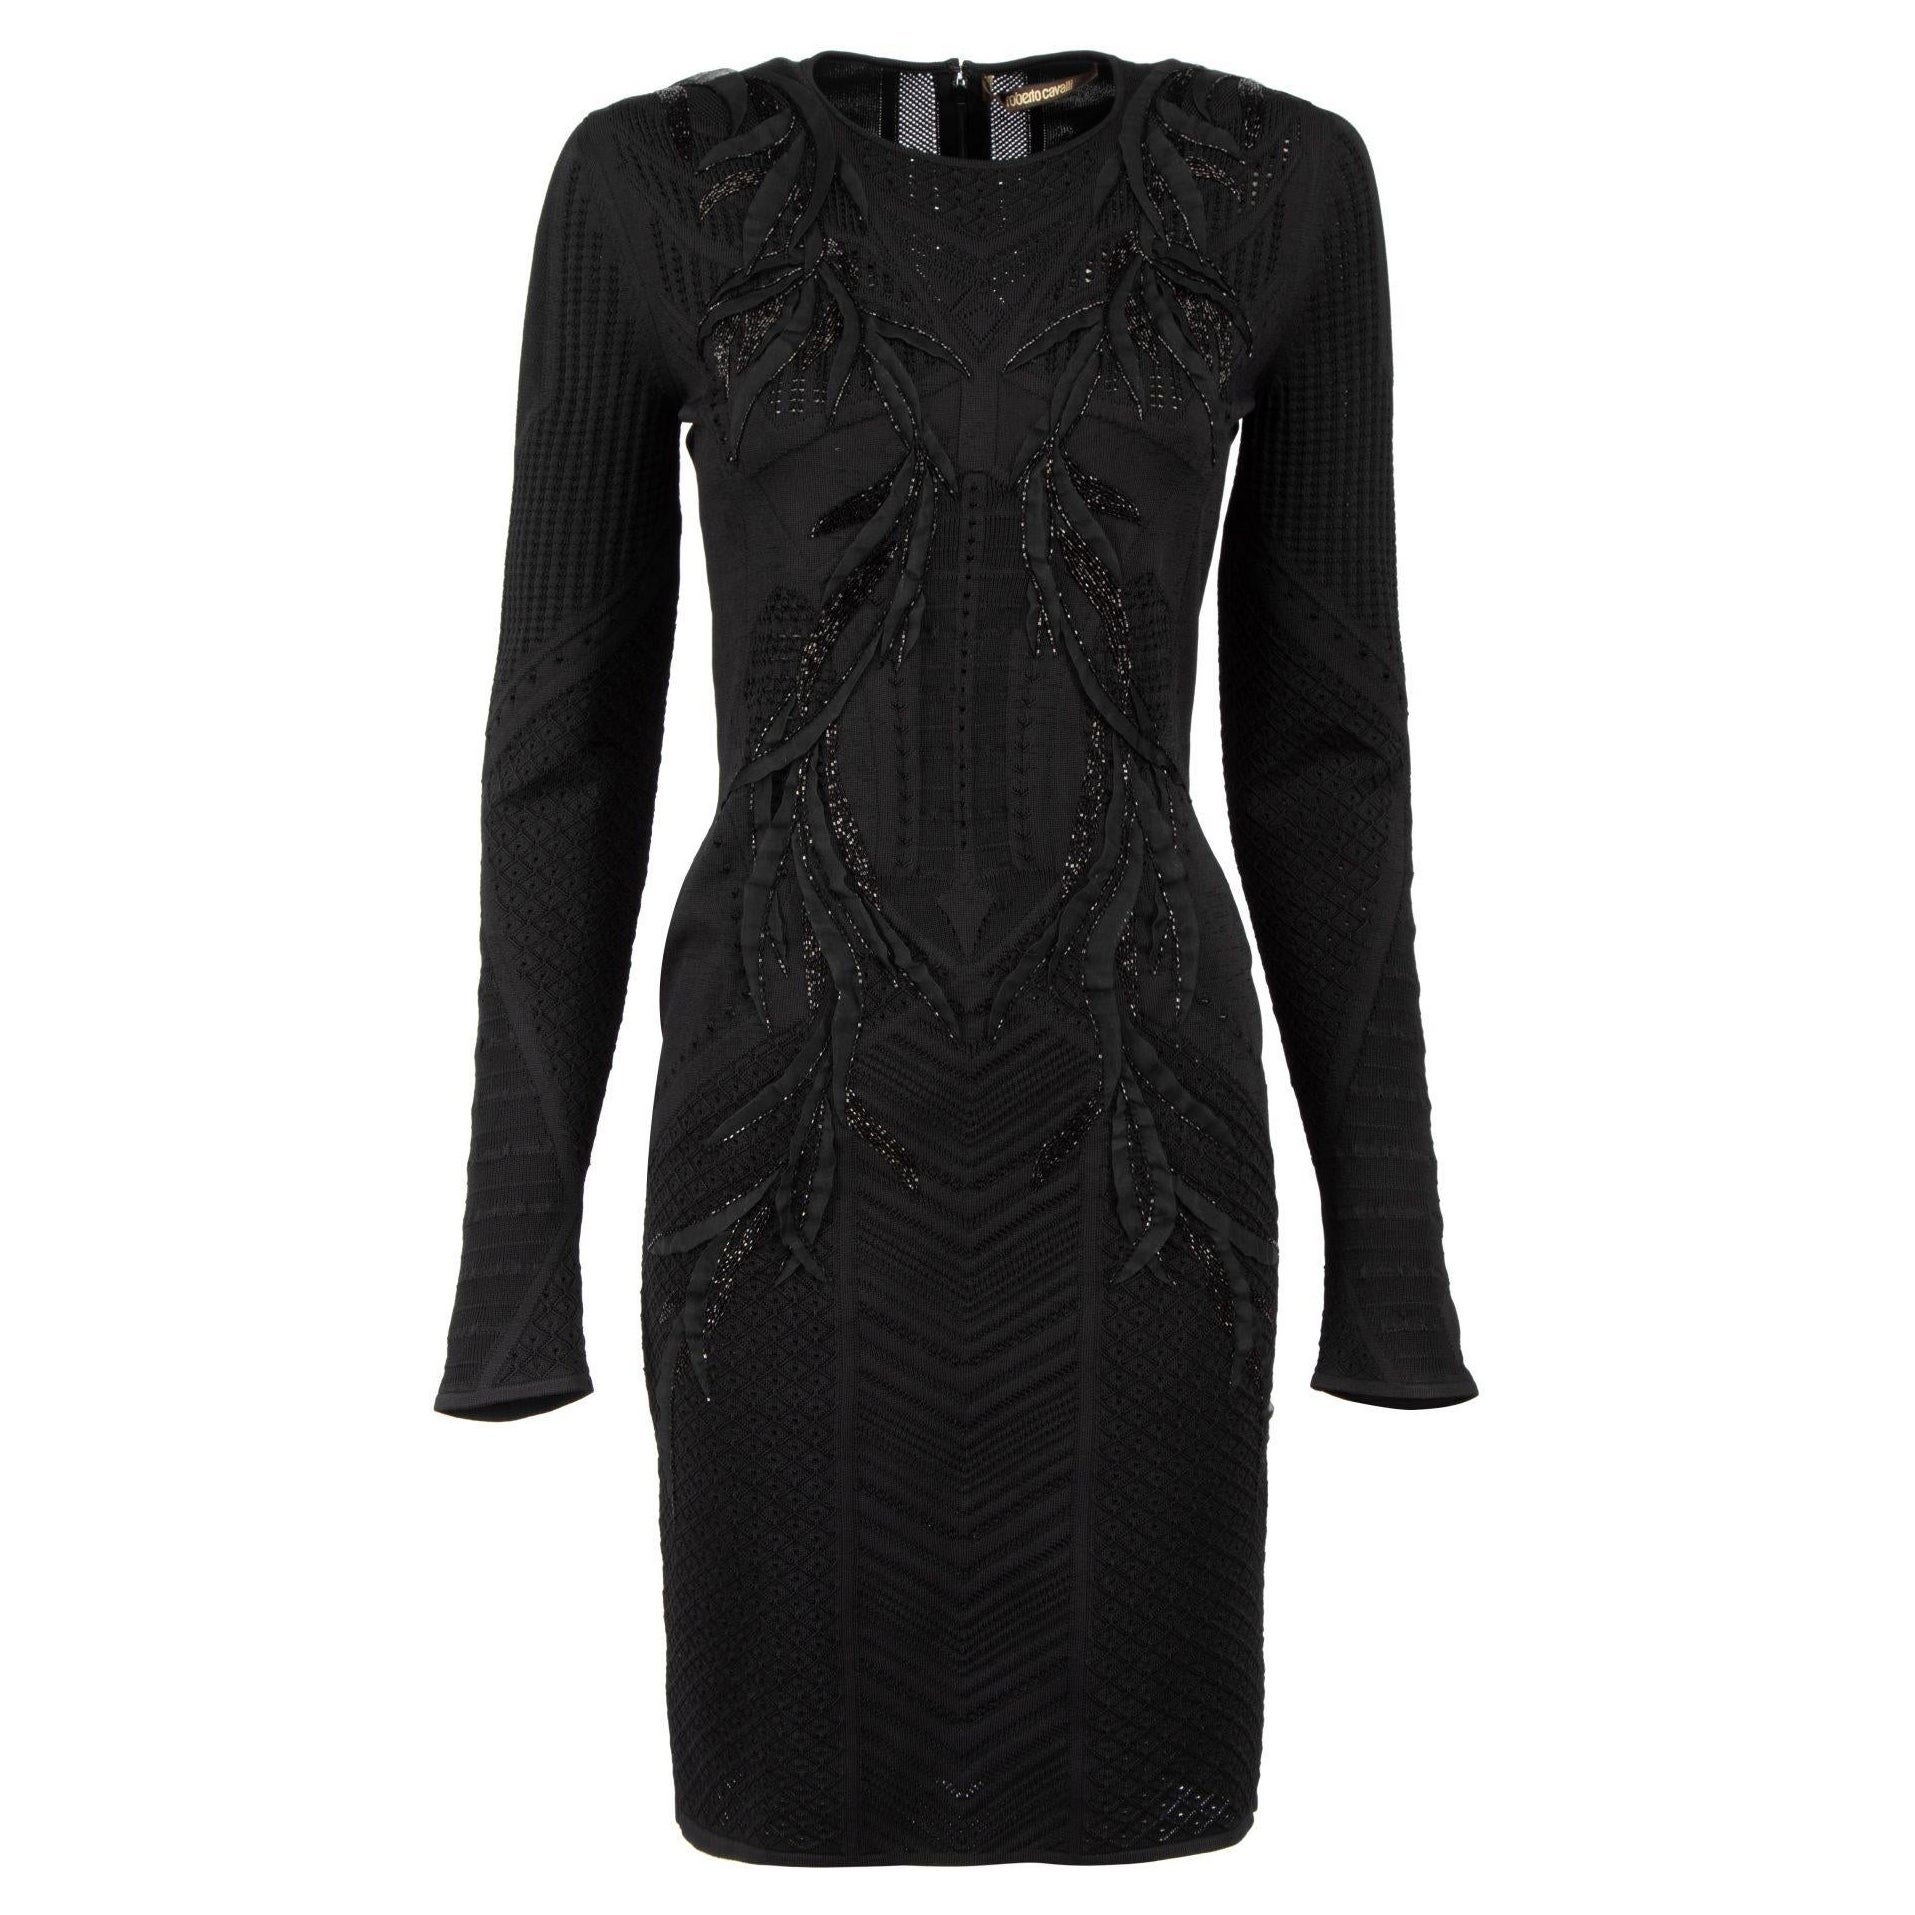 Roberto Cavalli Black Embellished Knit Bodycon Dress Size M For Sale